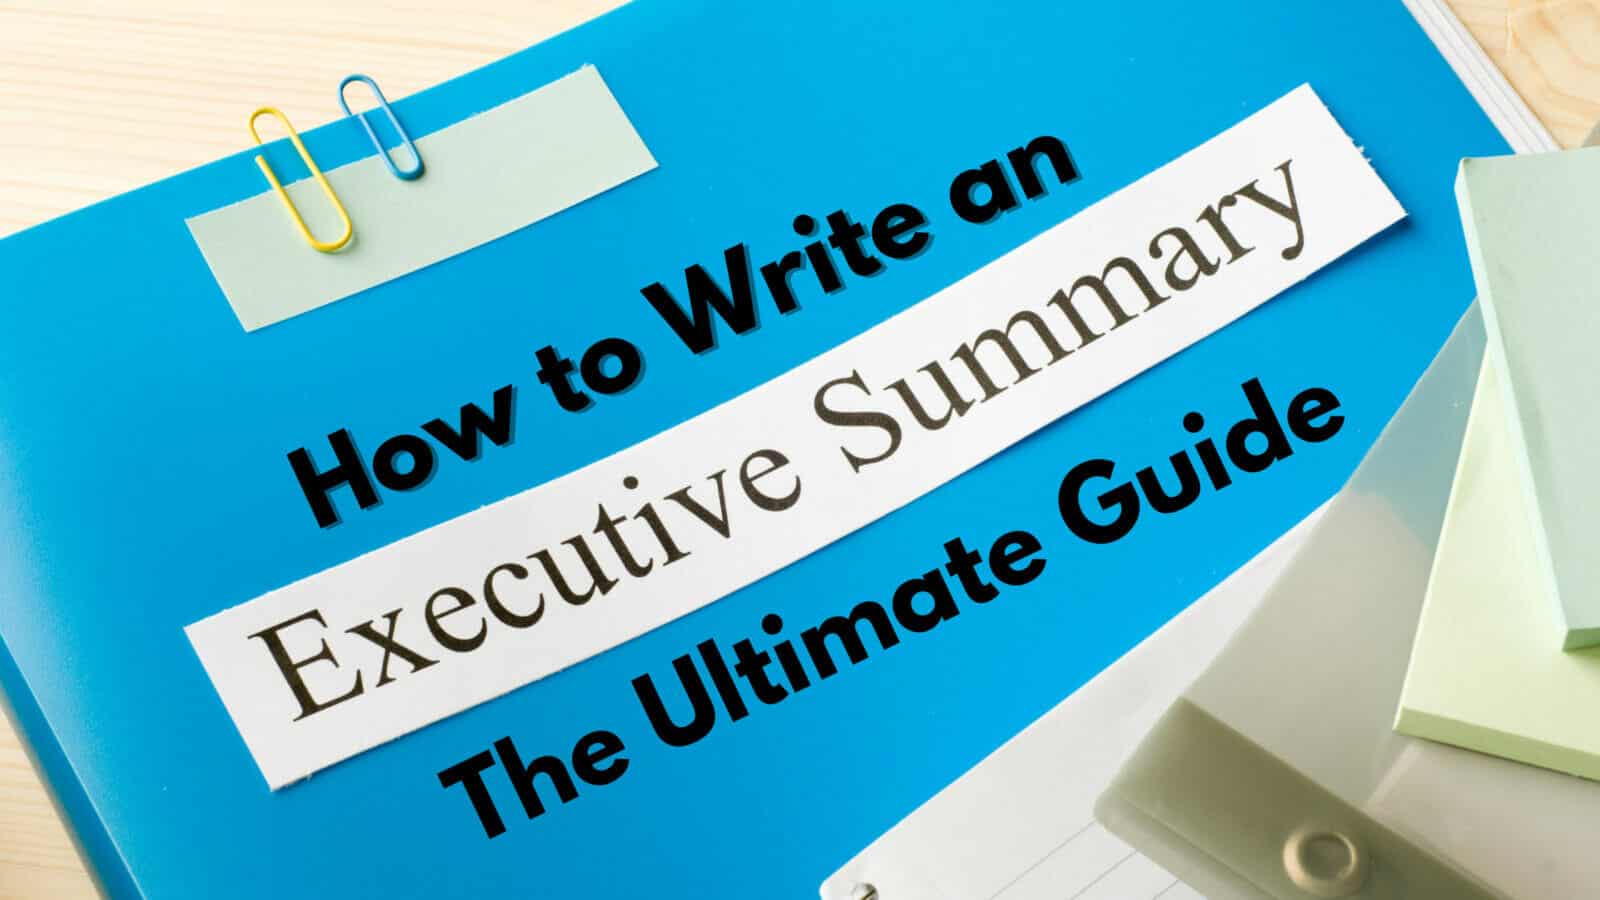 Guide, Executive Summary